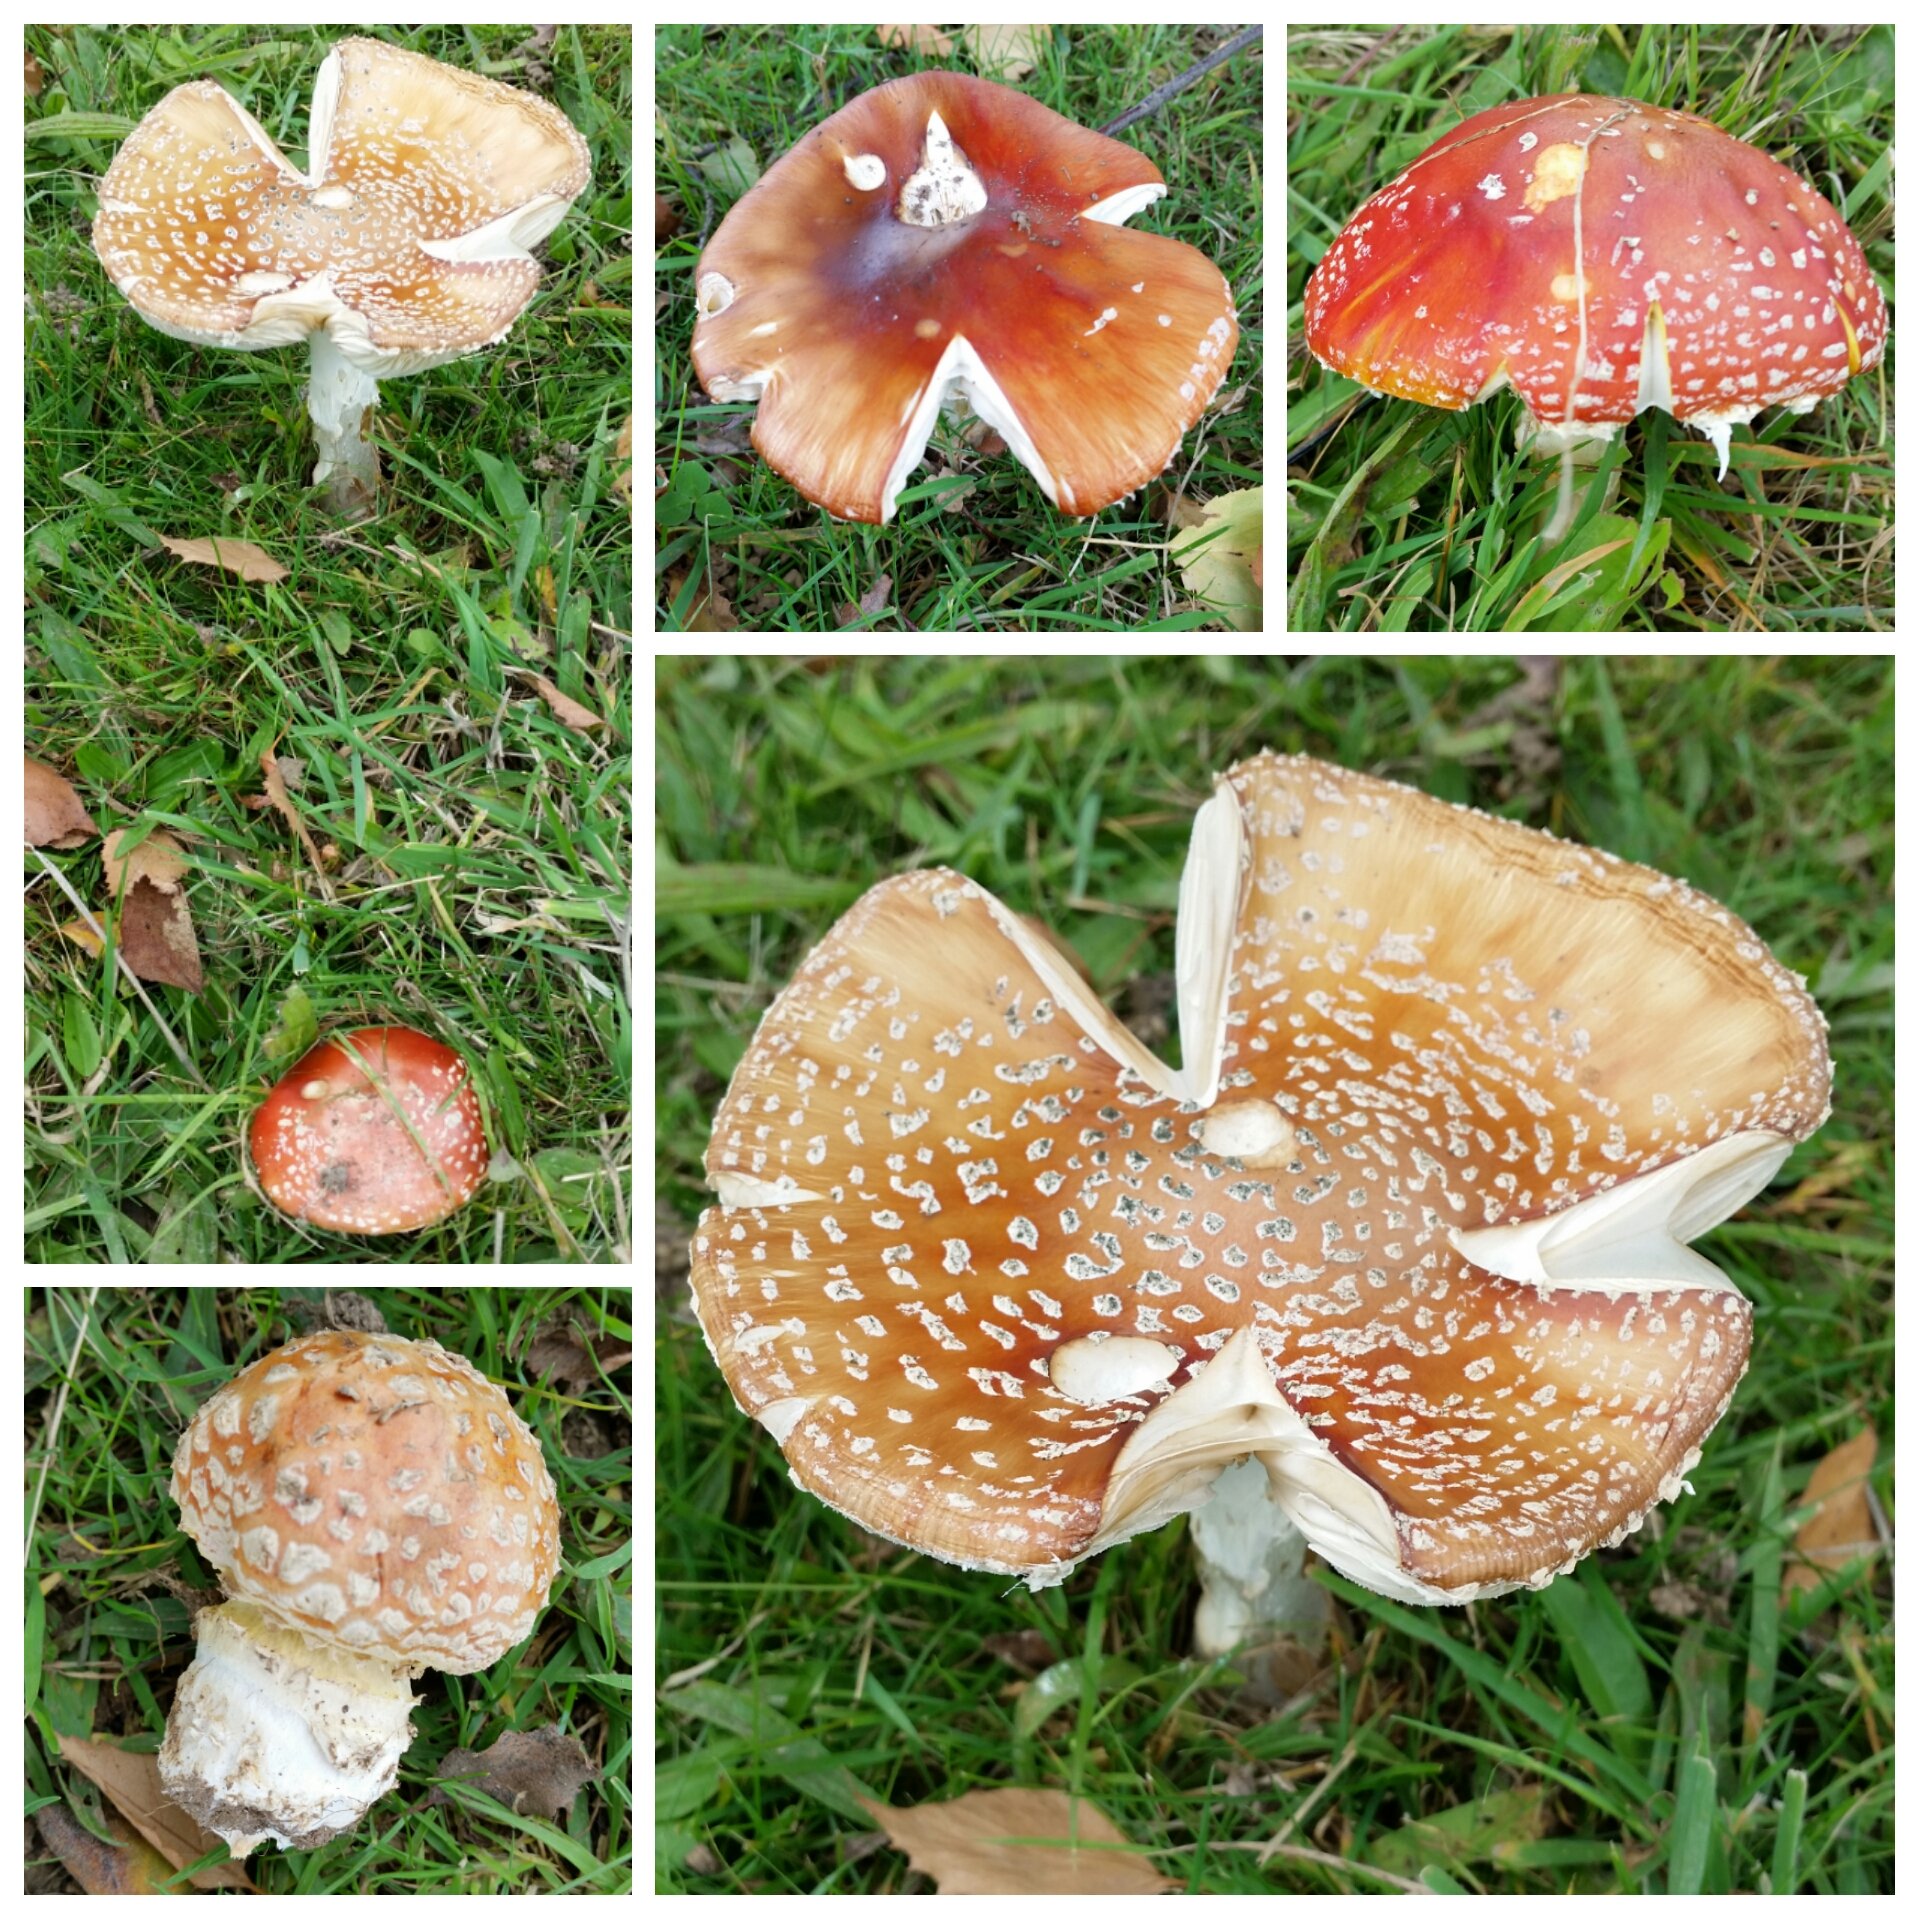 Fungi images. 30 Days Wild highlights